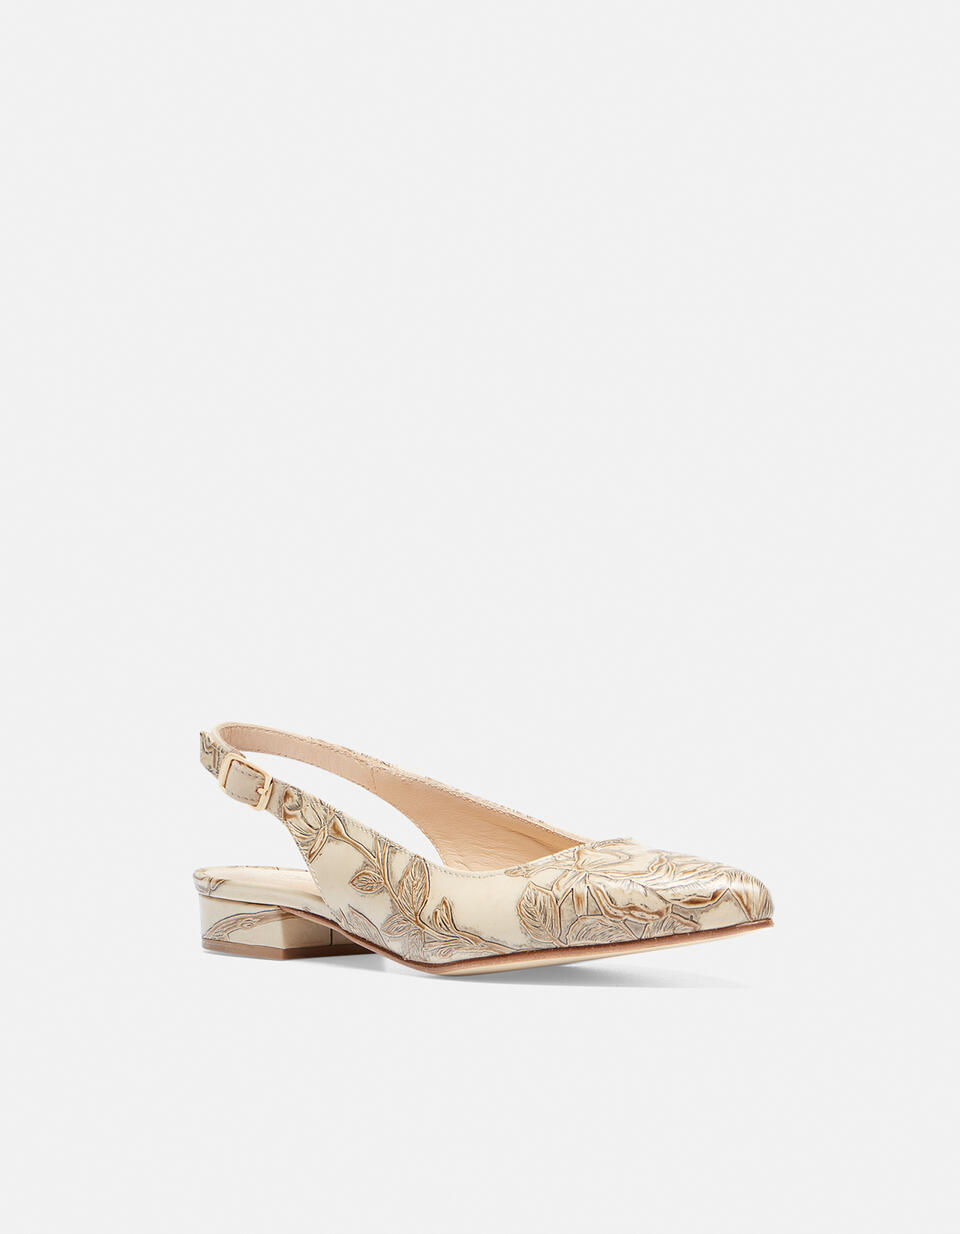 Slingback Mimi Taupe  - Woman Shoes - Shoes - Cuoieria Fiorentina